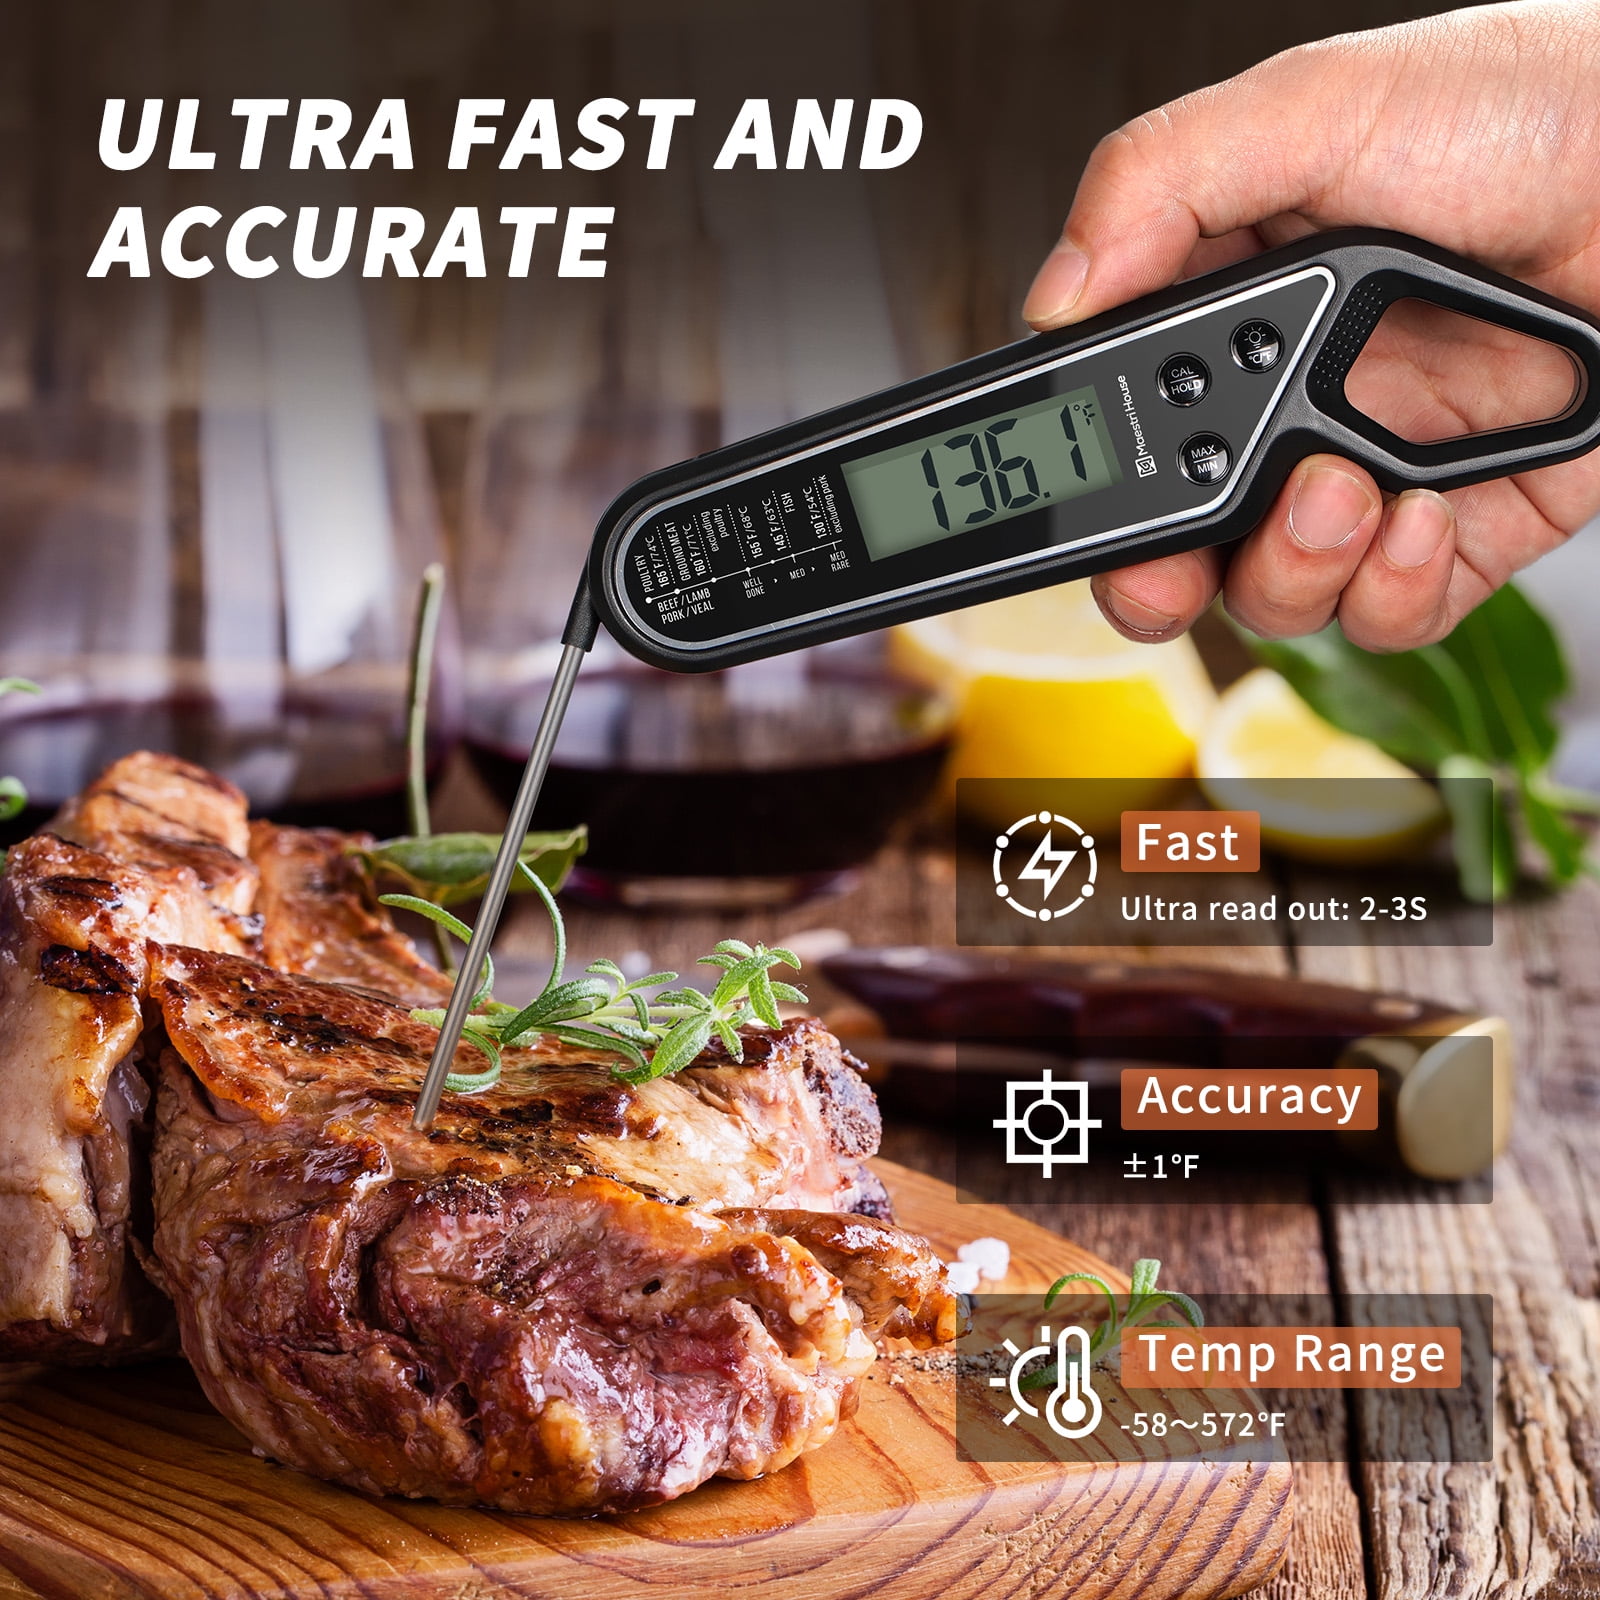 VA-6502 Digital Food Cooking Kitchen Thermometer Temperature Meter